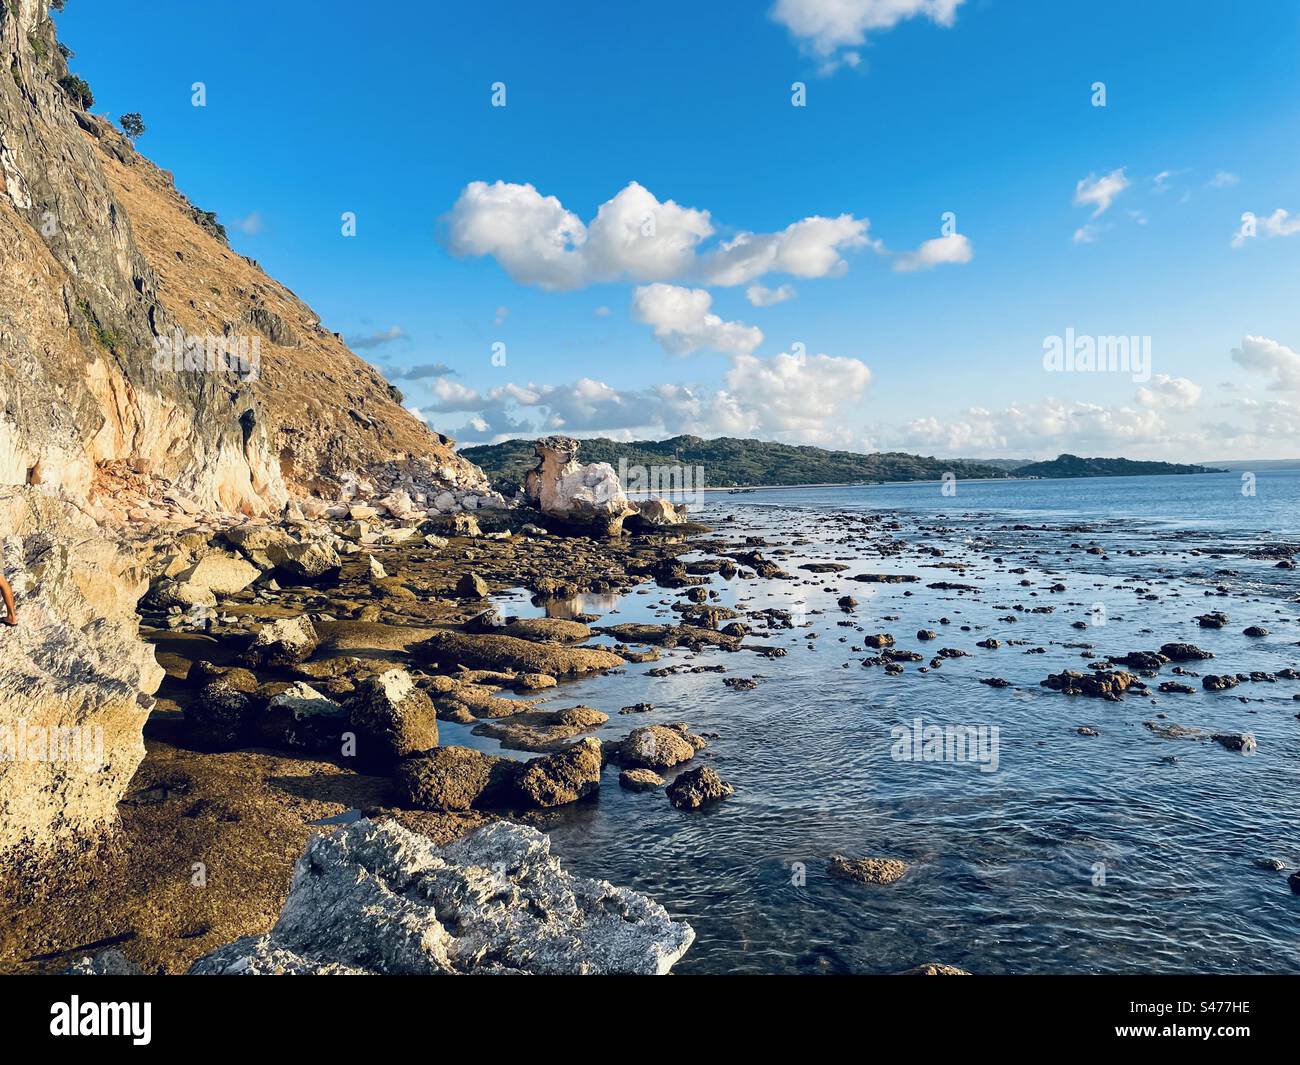 Blue sky, stones, and shallow sea Stock Photo